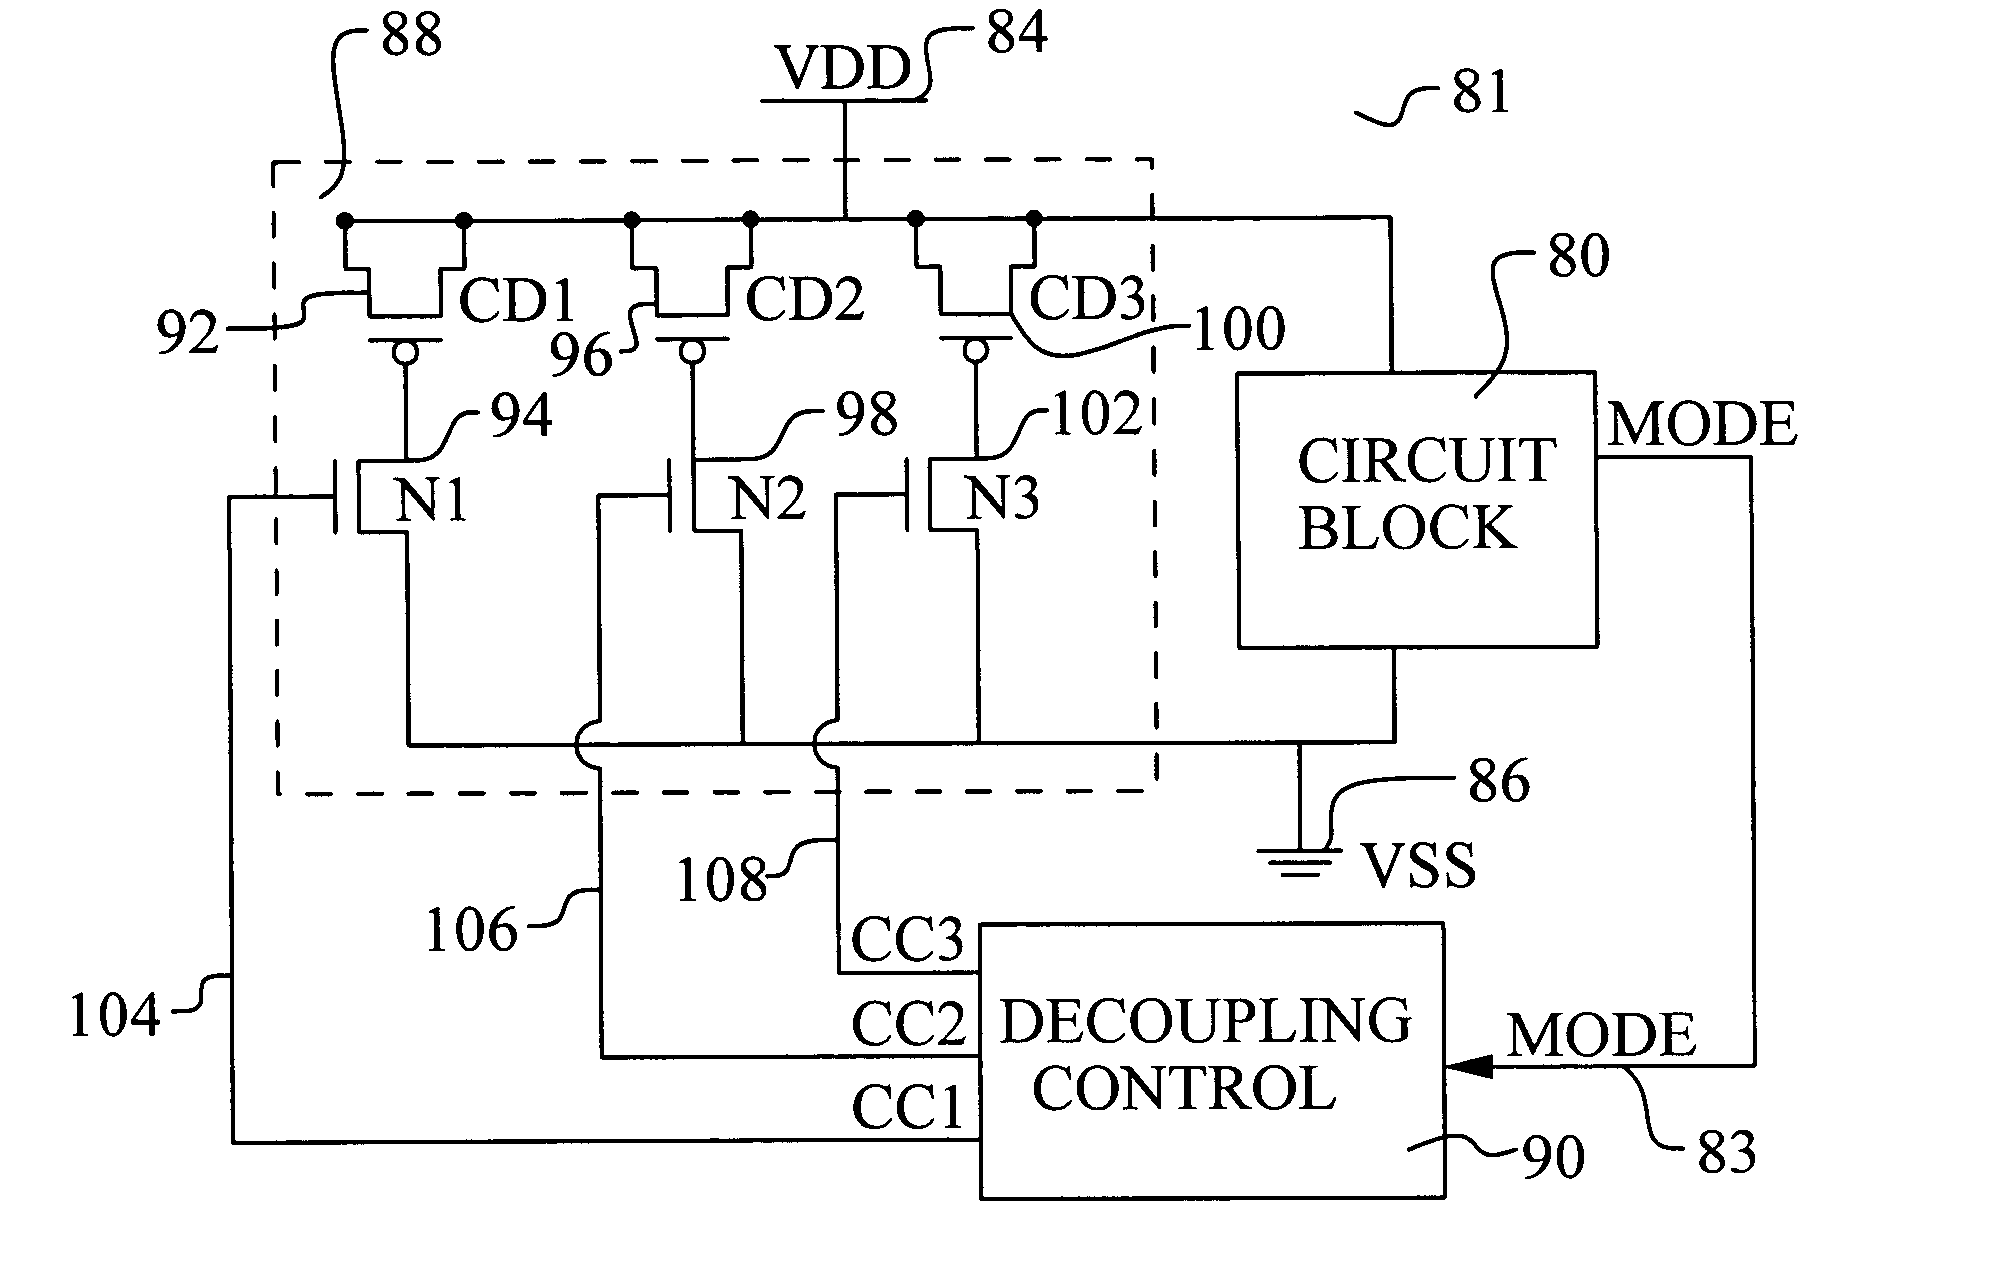 Dynamically adjustable decoupling capacitance to reduce gate leakage current